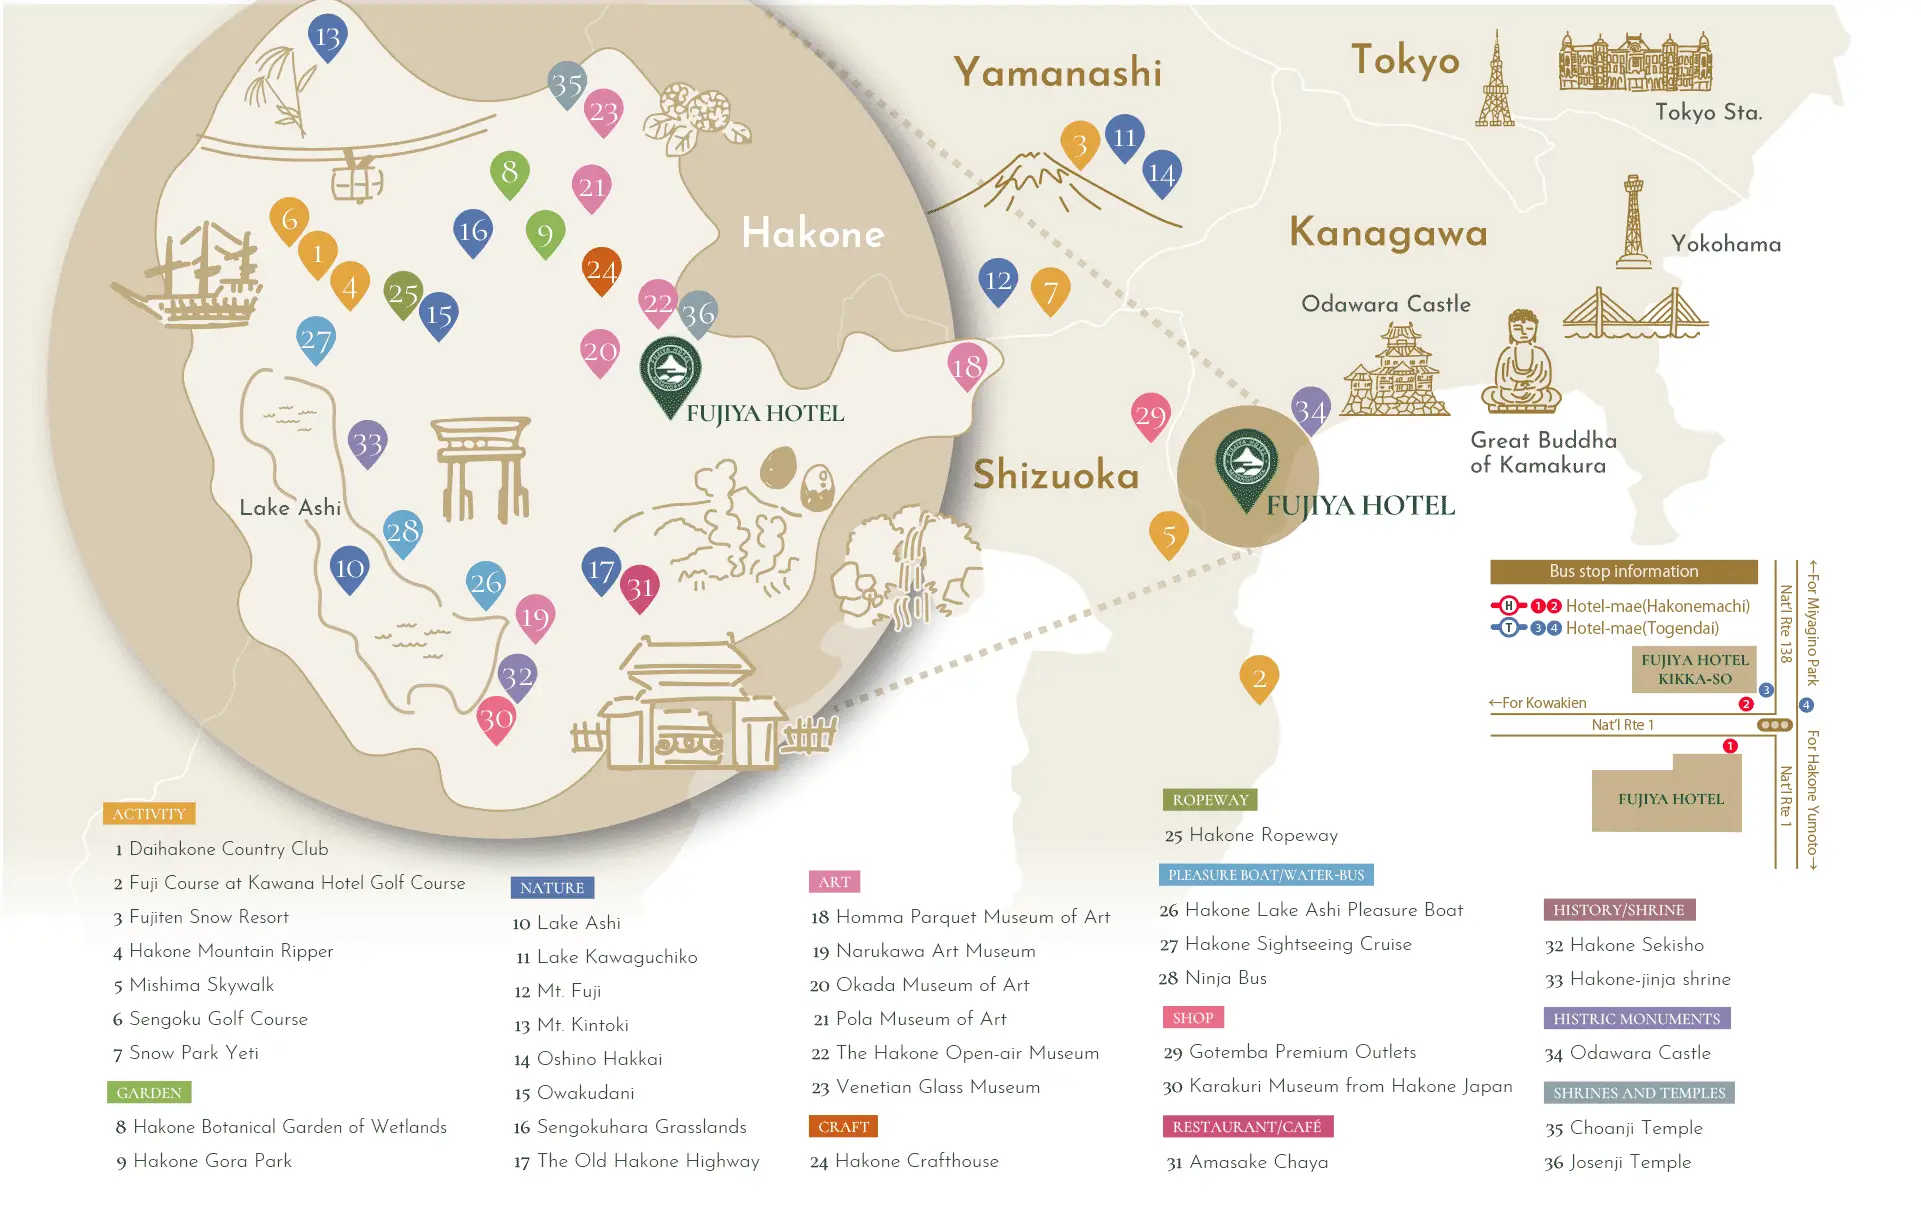 image:Fujiya hotel around tourist attractions map